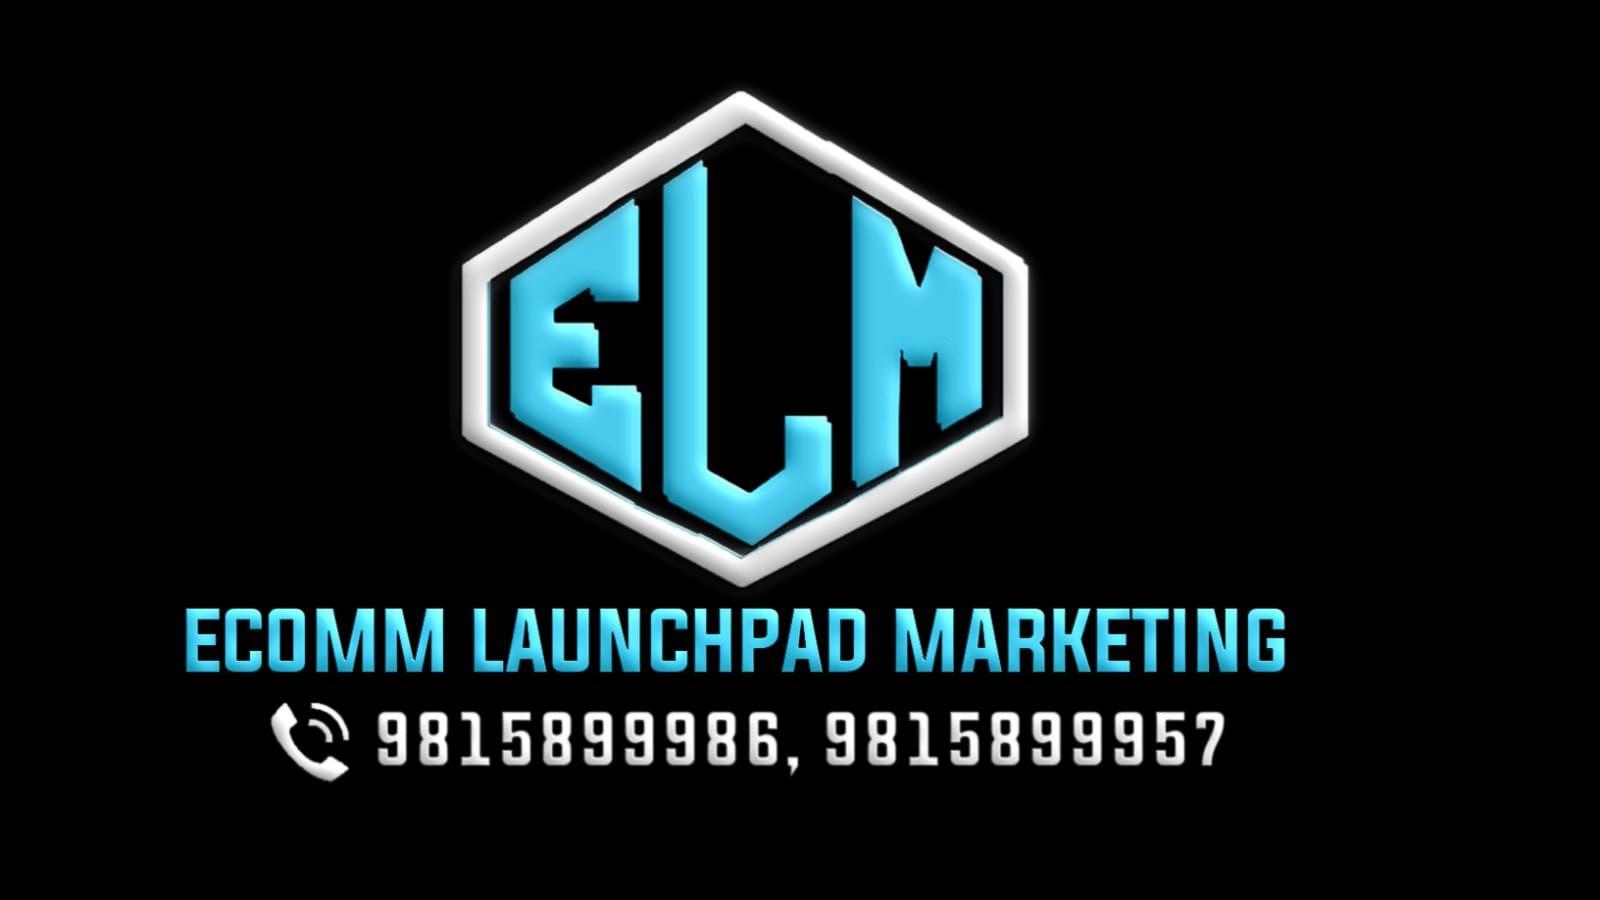 Ecomm Launchpad Marketing